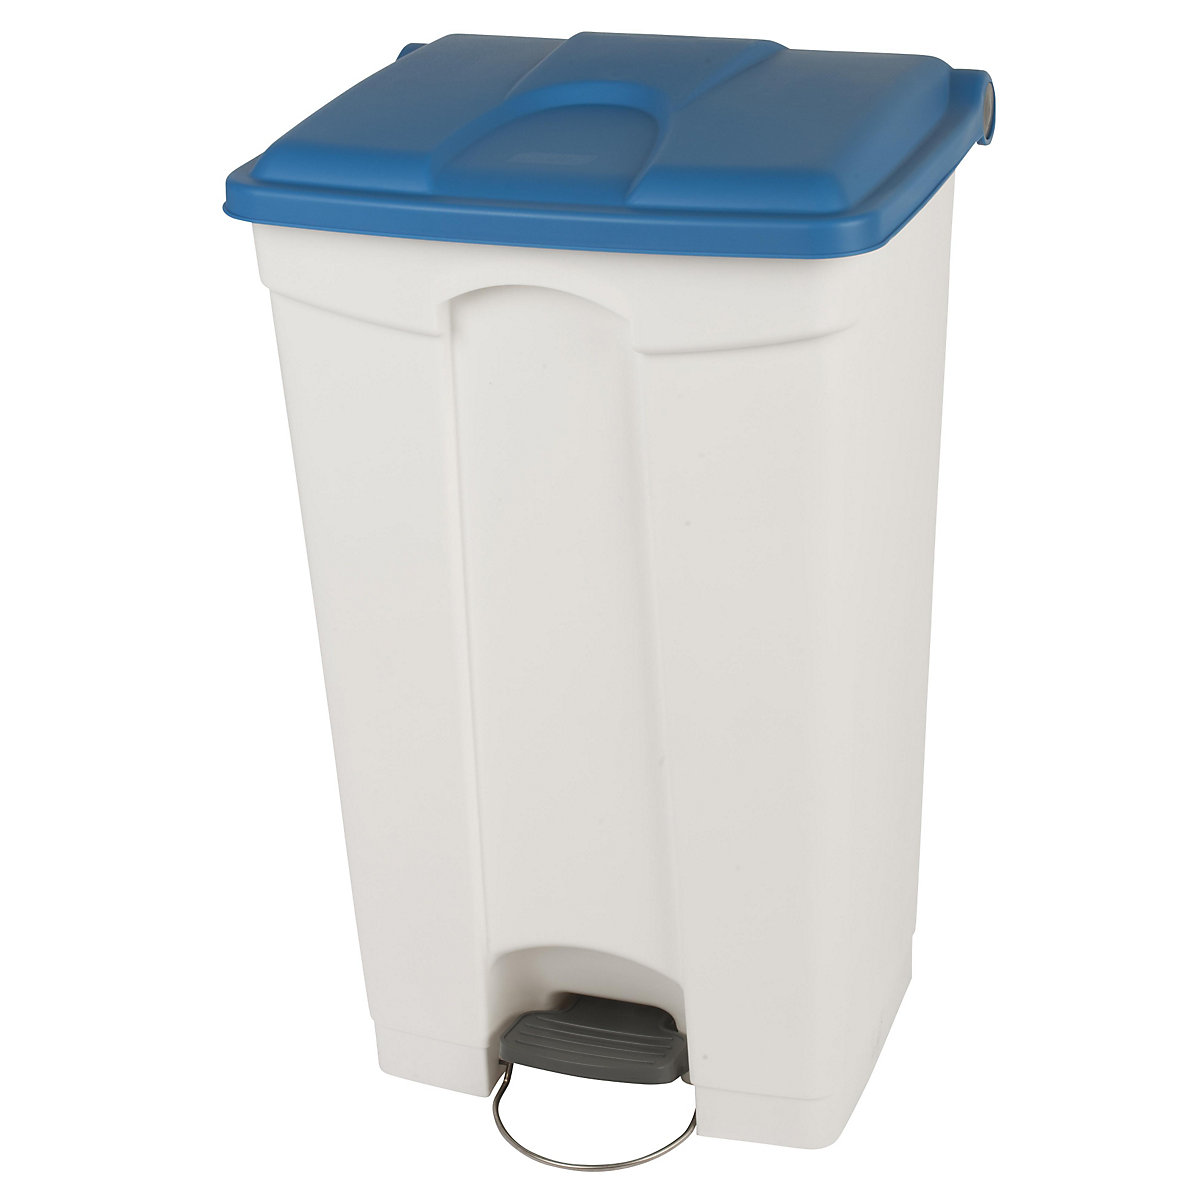 EUROKRAFTbasic – Pedal waste collector, capacity 90 l, WxHxD 505 x 790 x 410 mm, white, blue lid